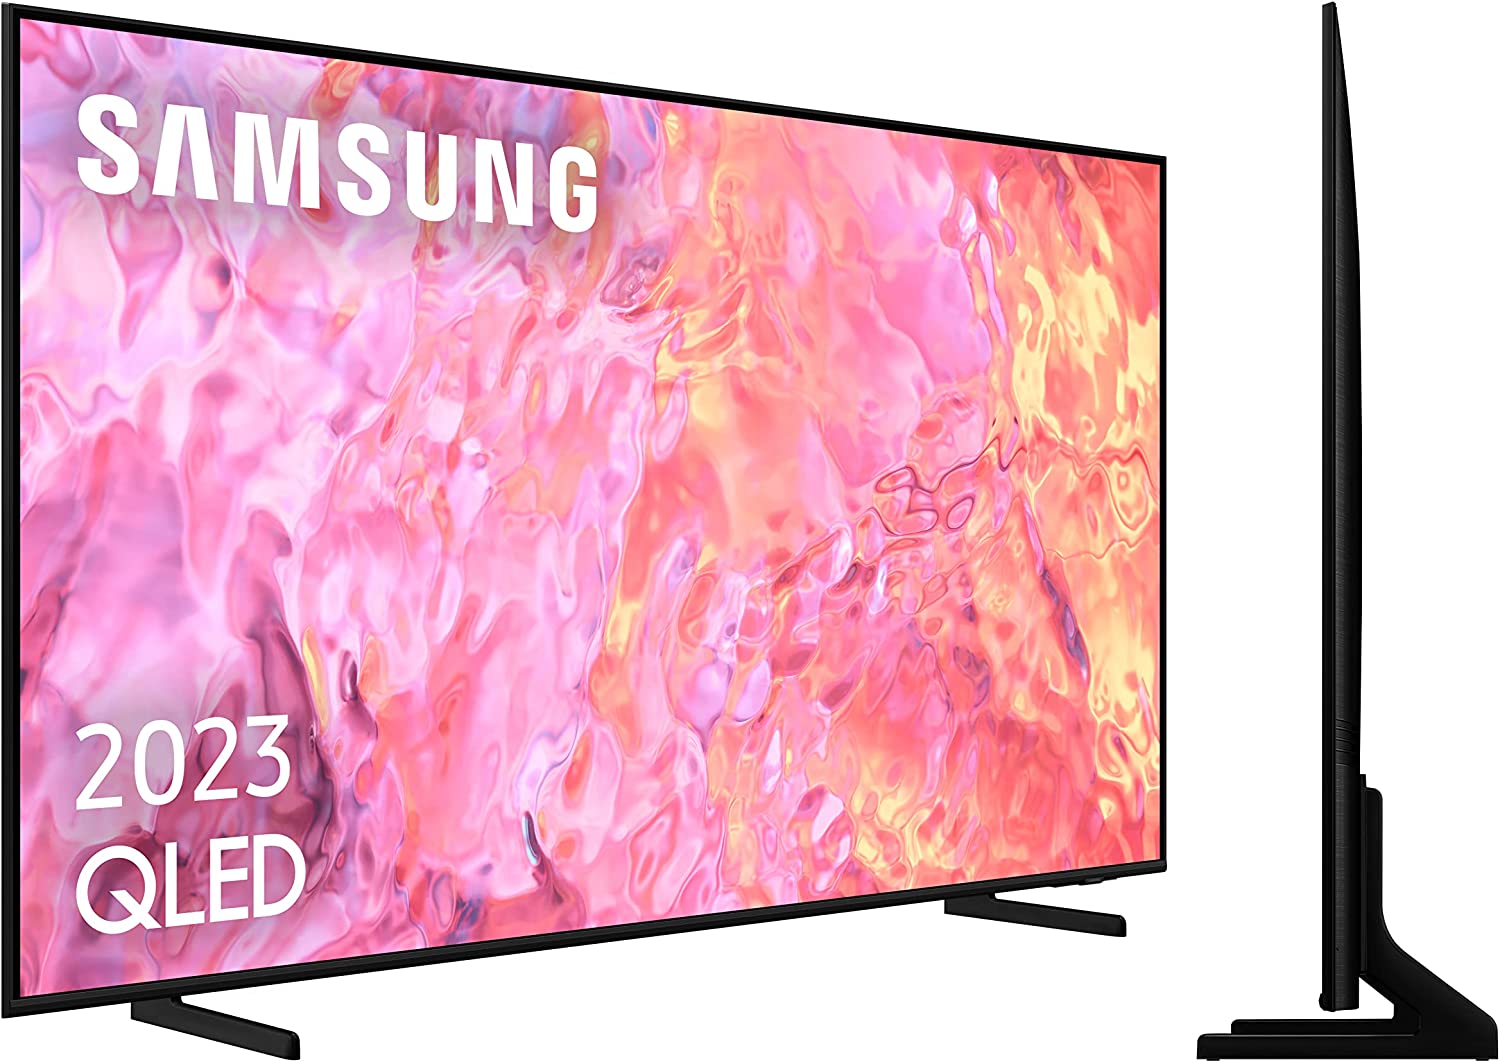 Samsung TV QLED 43Q60C vs Samsung Crystal UHD 50CU8000